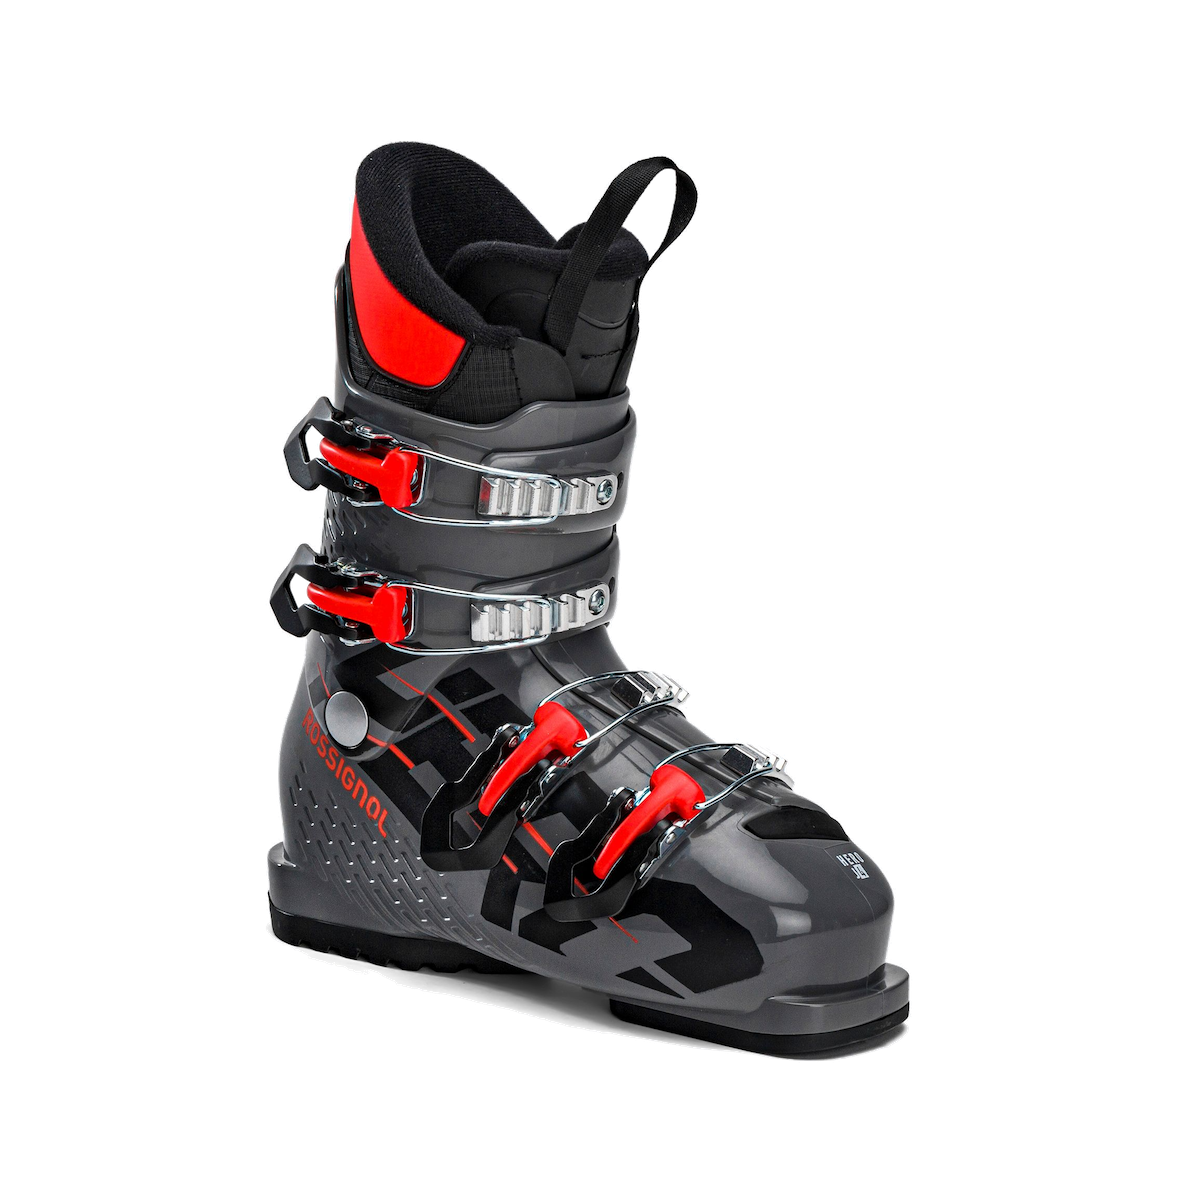 ROSSIGNOL HERO J4 alpine ski boots - meteor grey